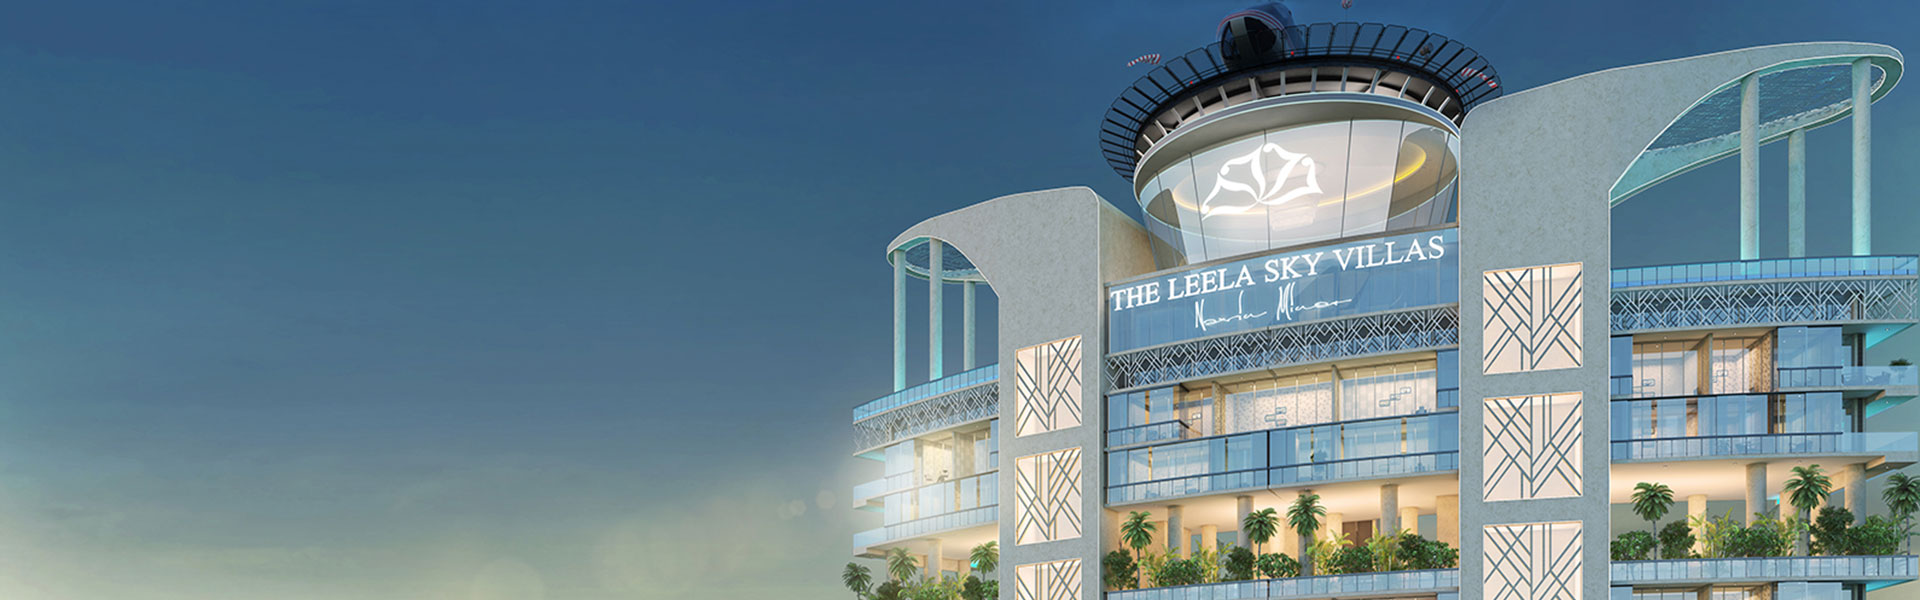 The Leela Sky Villas